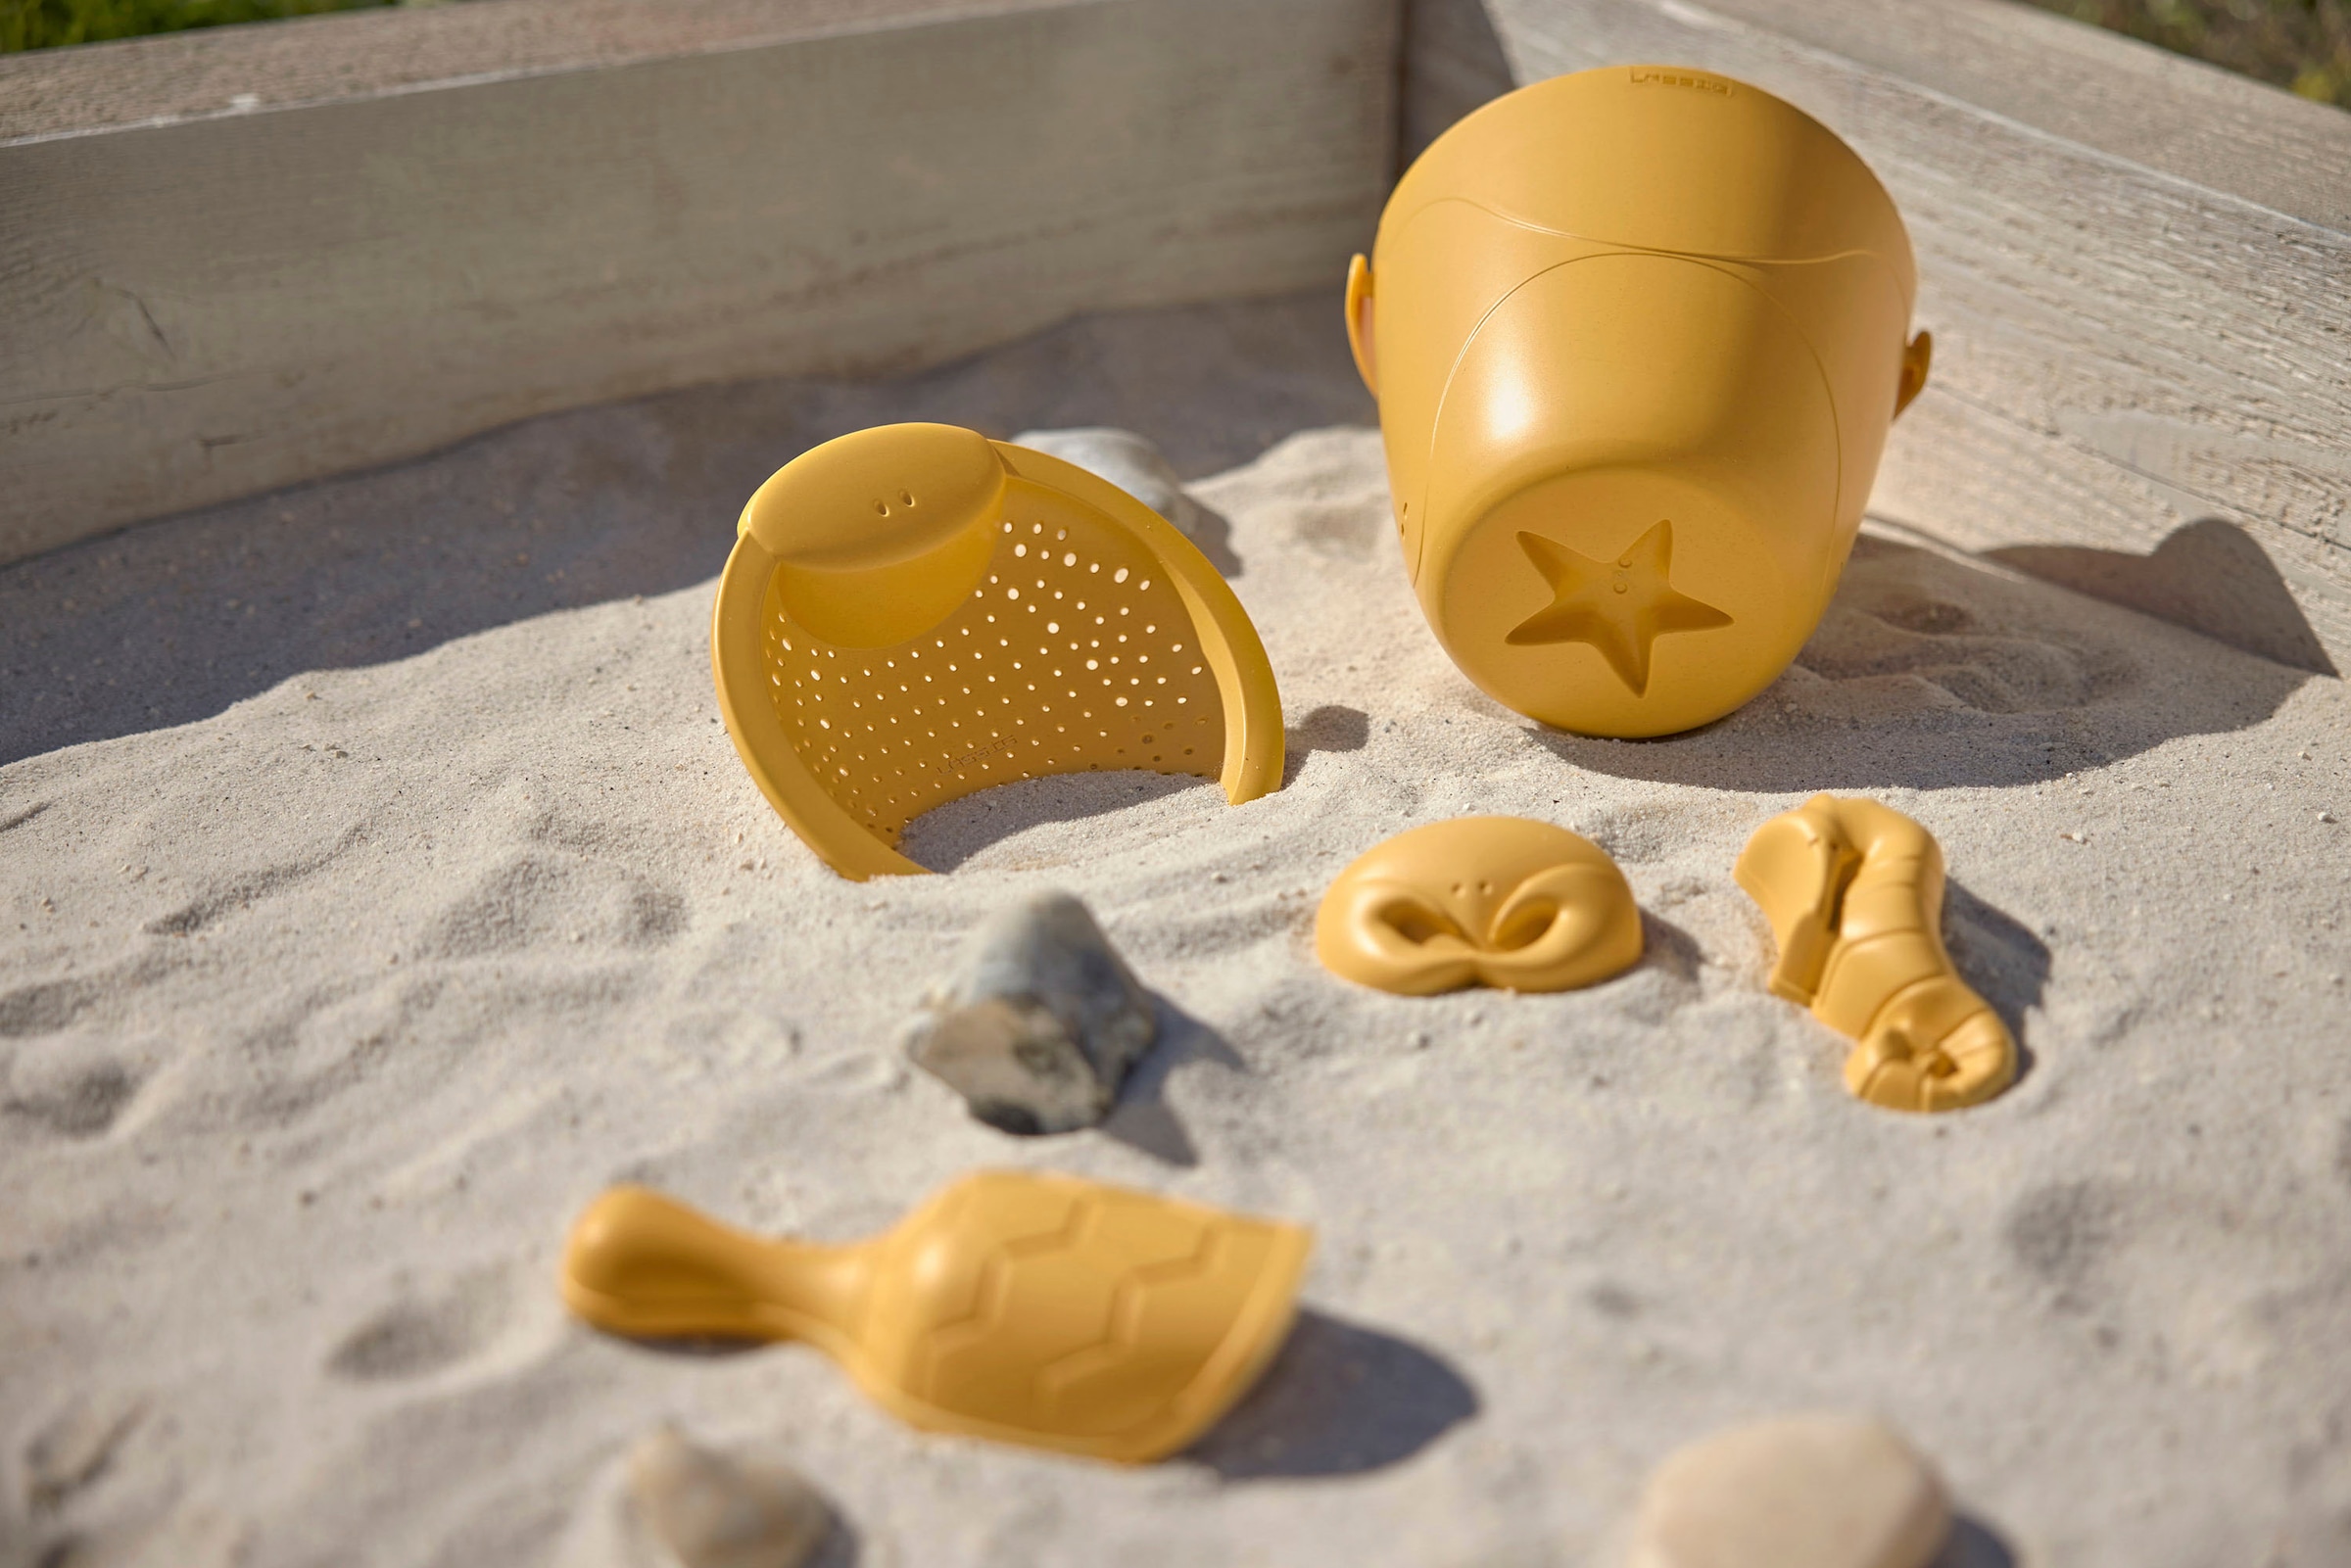 LÄSSIG Sandform-Set »Sandspielzeug 5er Set Water Friends, yellow«, (Set, 5 tlg.), Material aus ressourcenschonendem Biokomposit